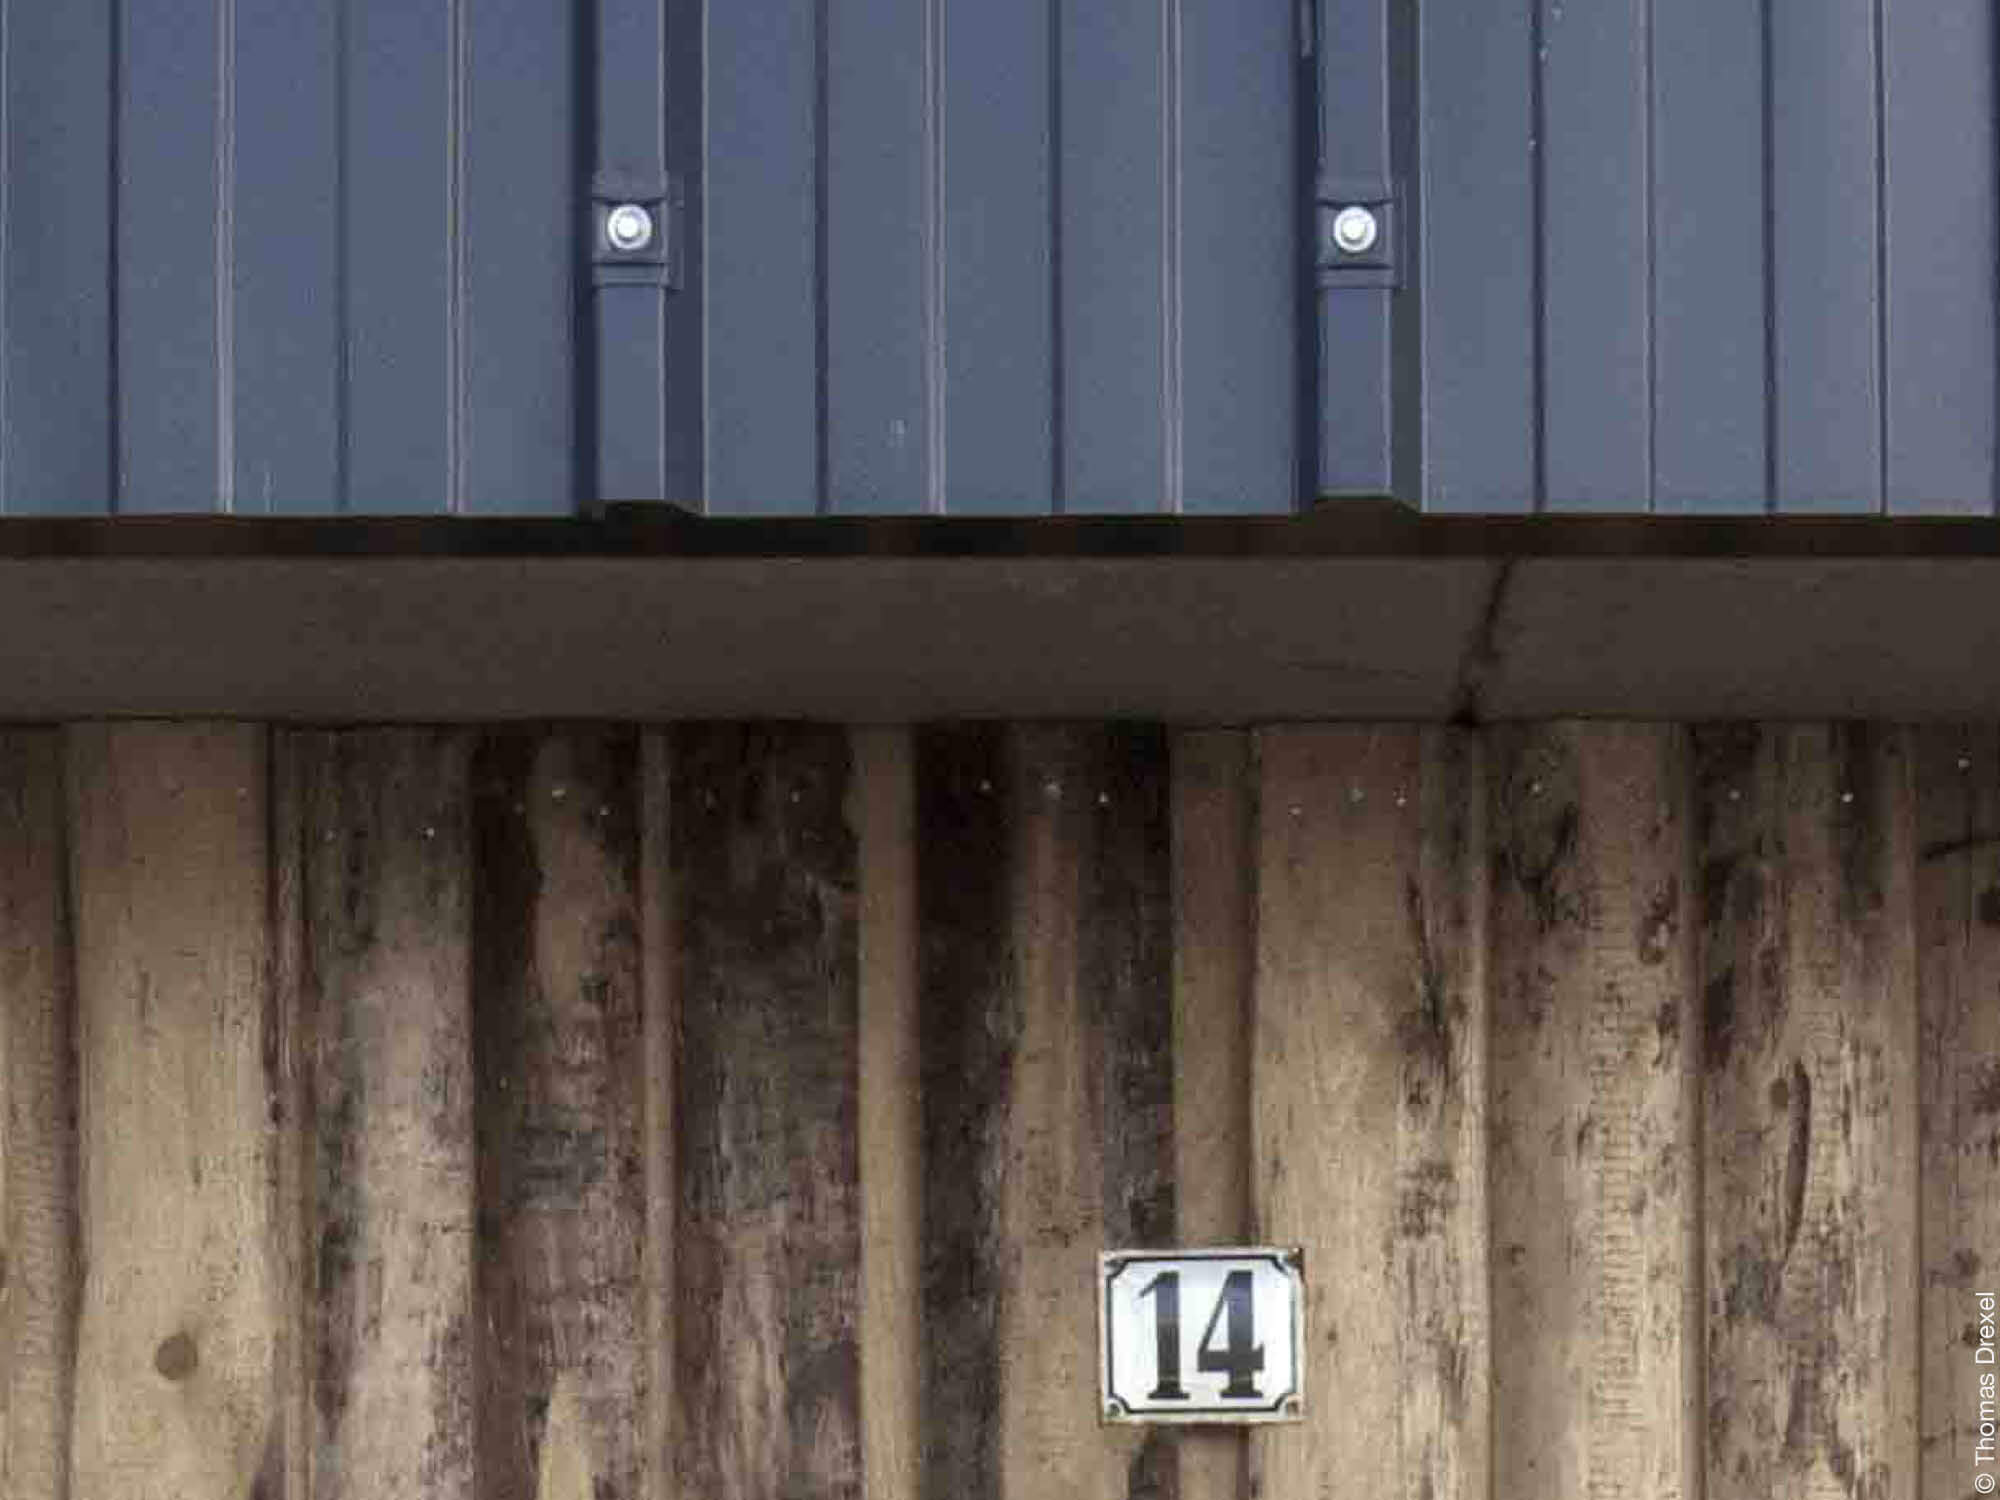 Holzfassade und Blechverkleidung mit Hausnummer